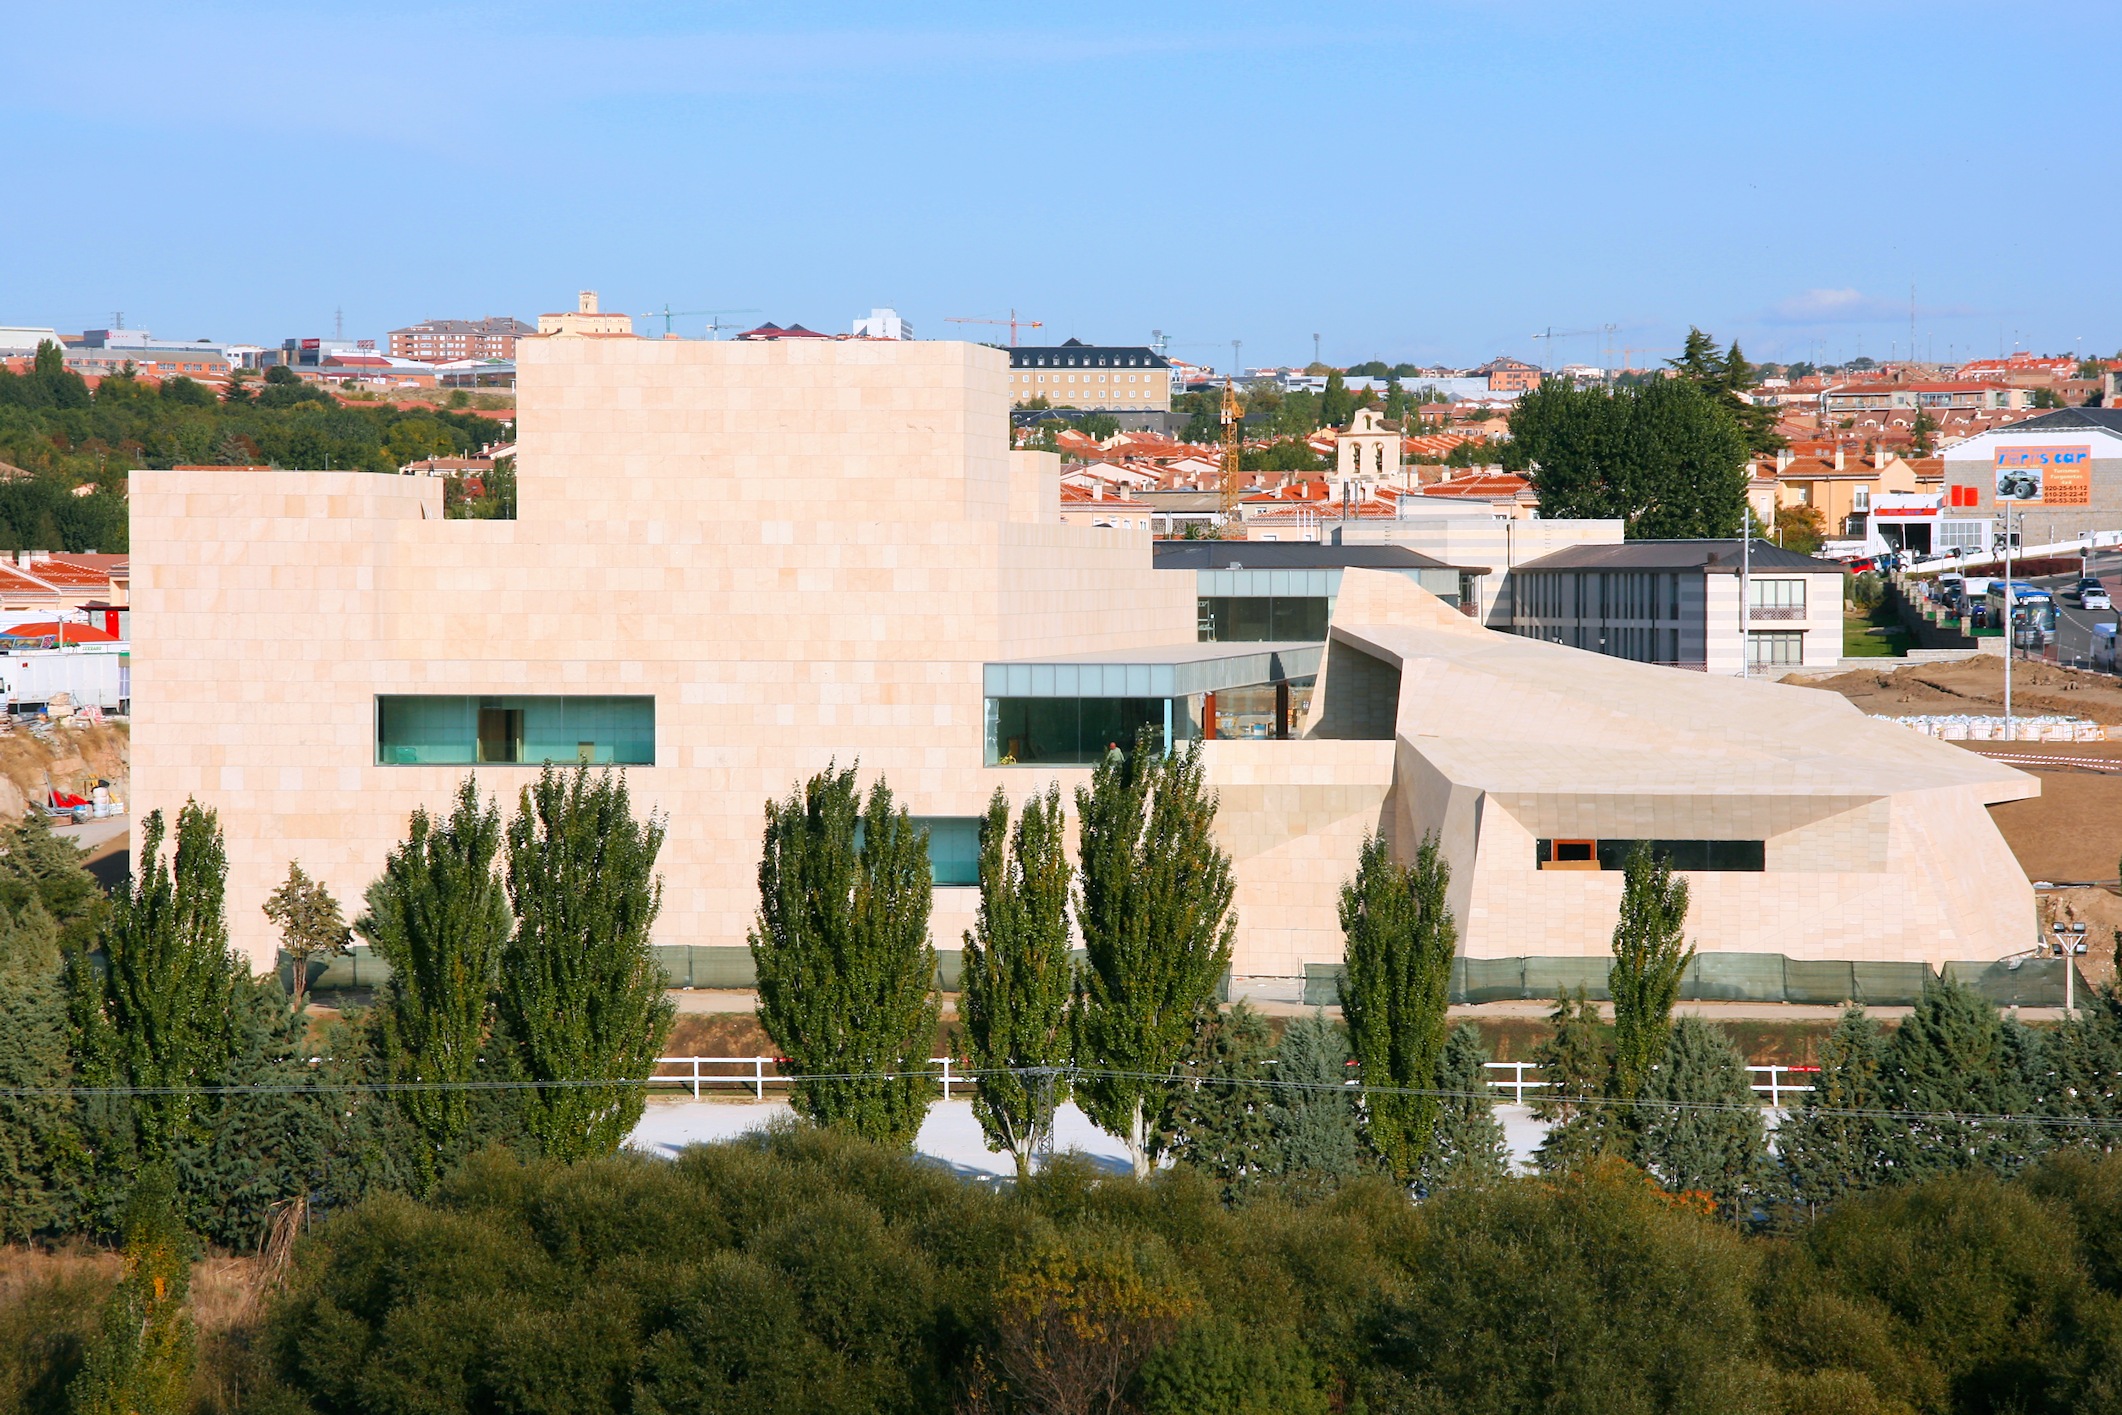 009 Avila, Spain - Lienzo Norte Conference and Exhibition Centre